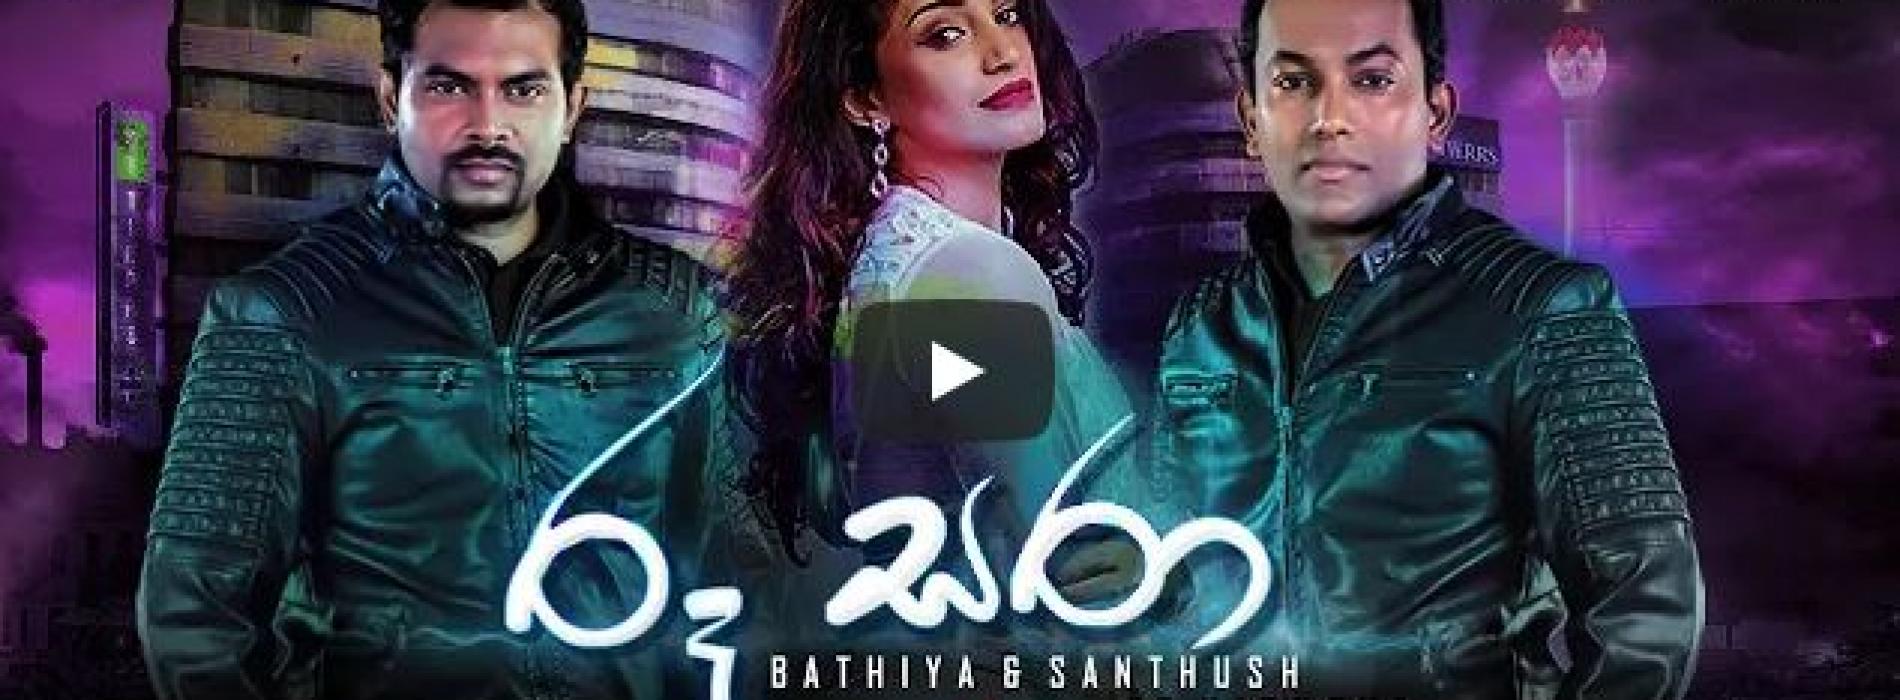 New Music : Roo Sara (රූ සරා) – Bathiya & Santhush feat Hirushi (Official Music Video)